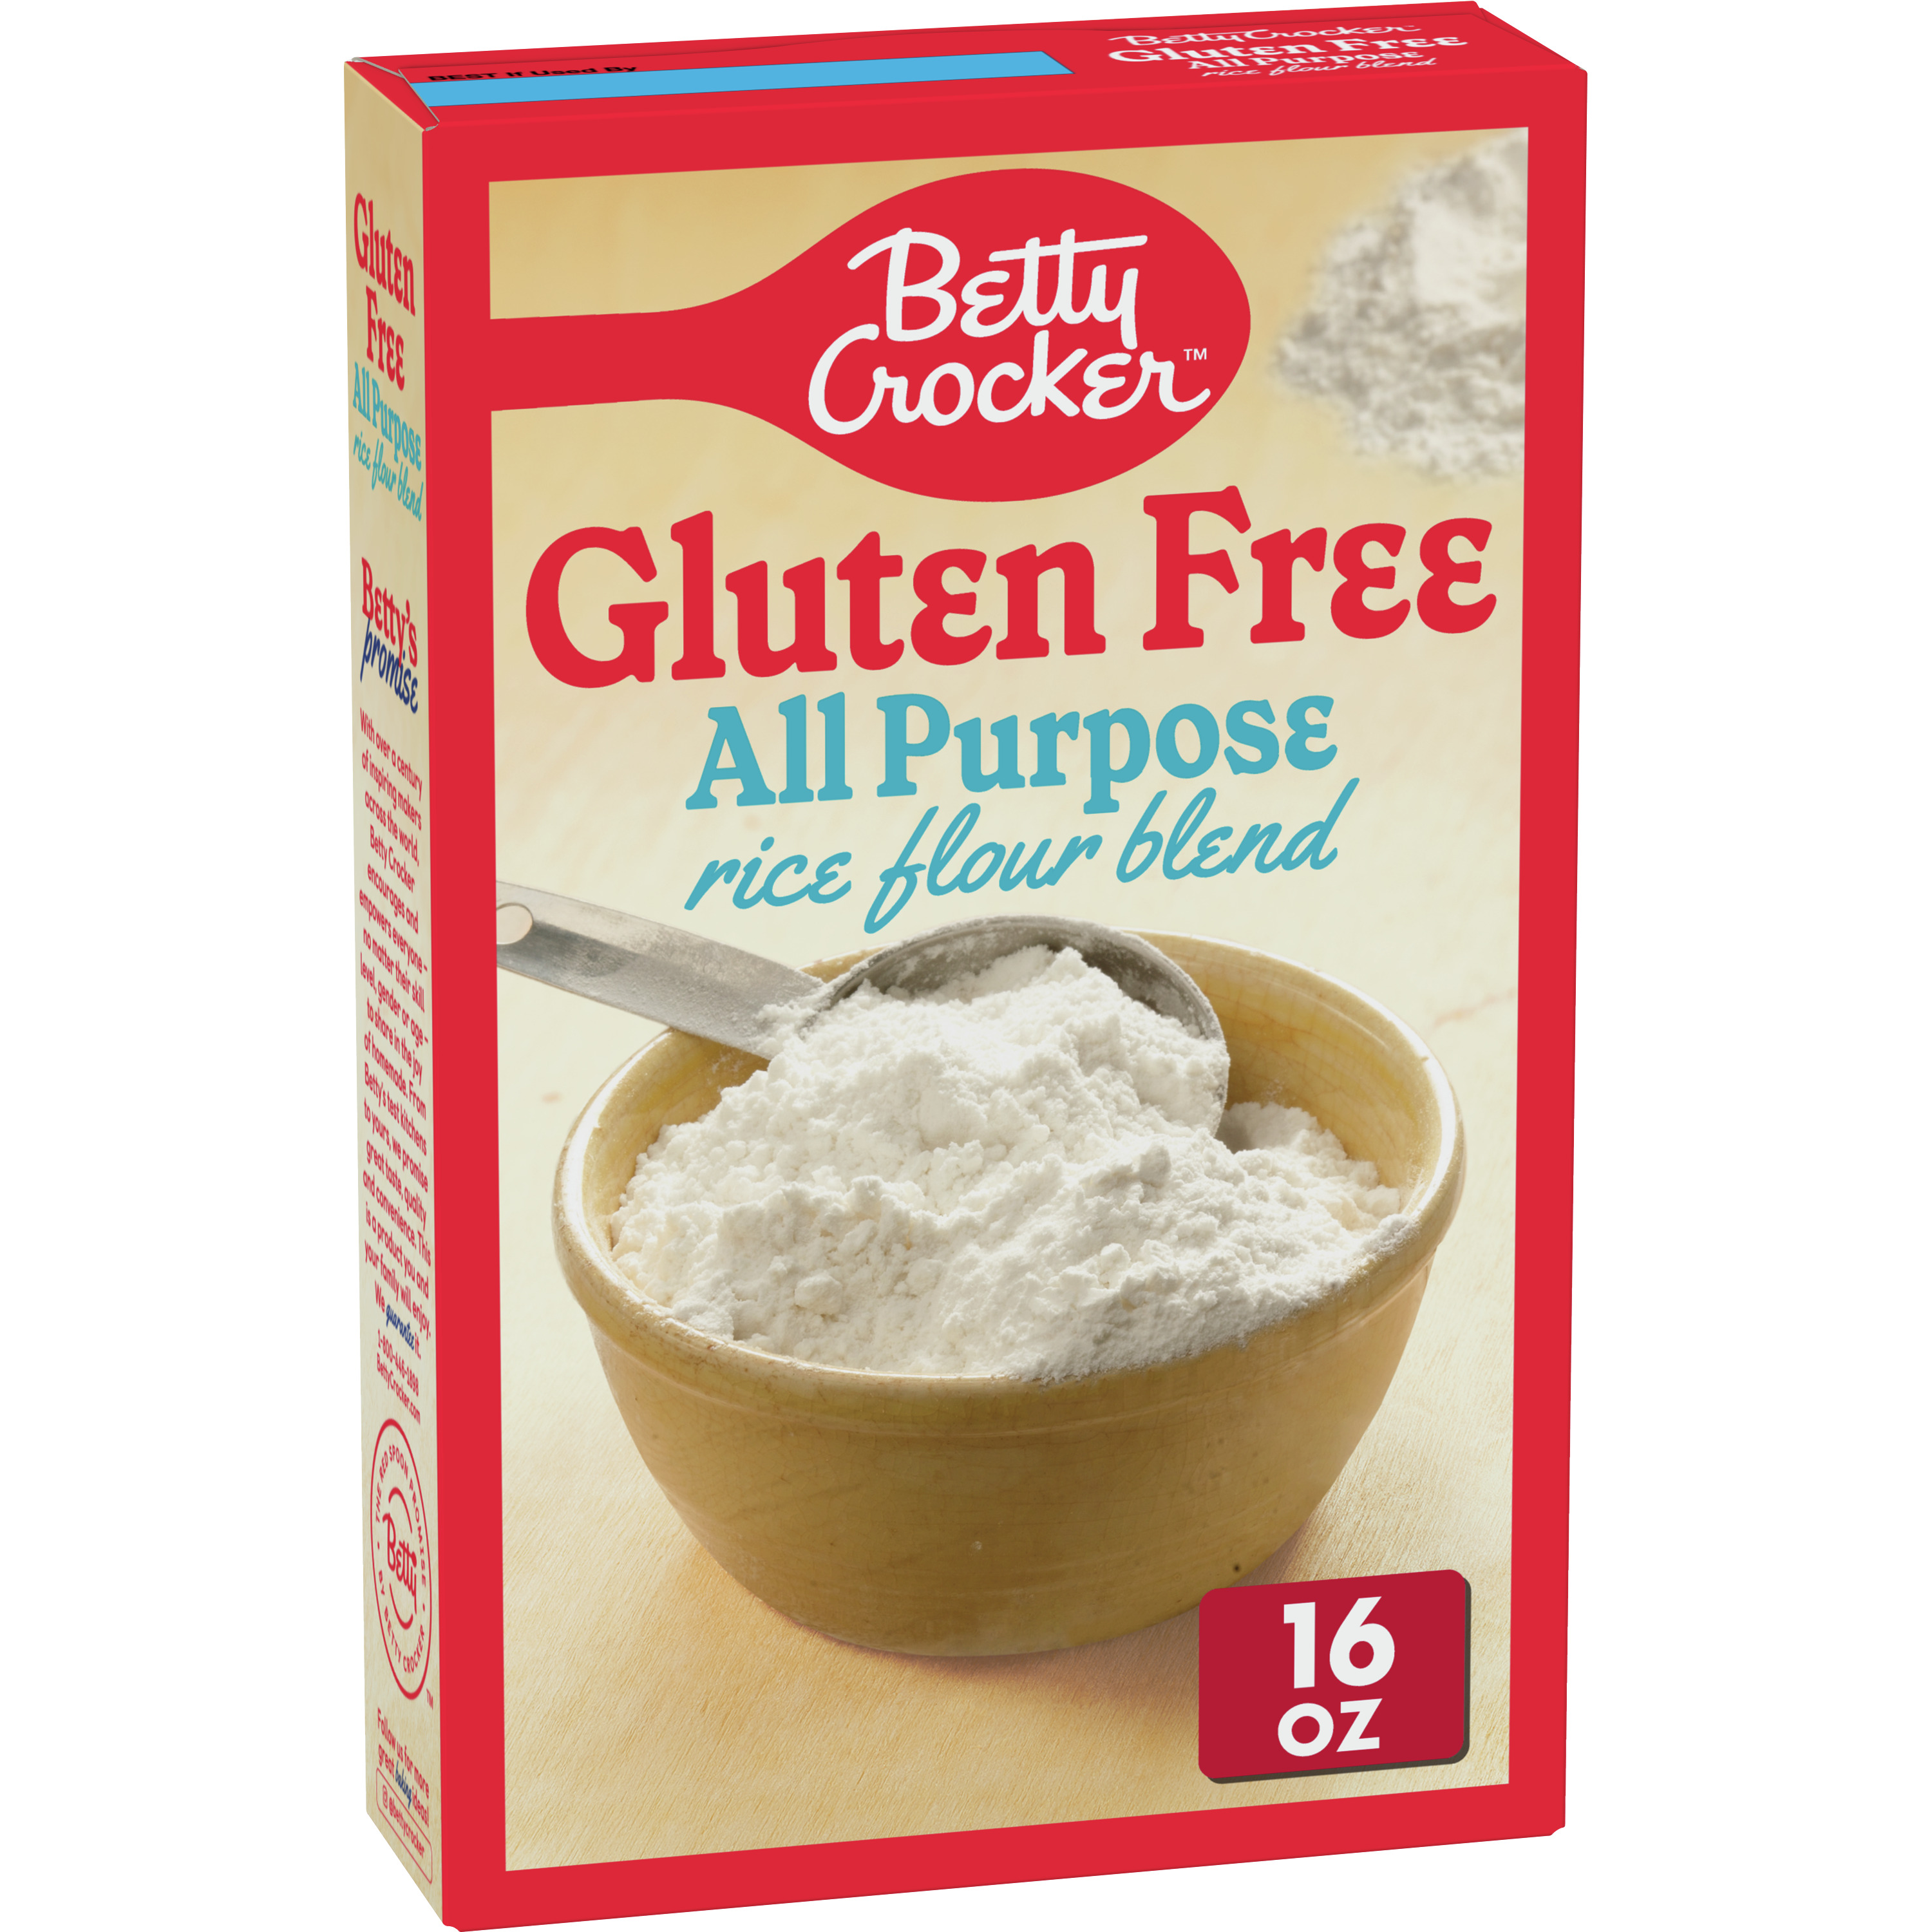 Betty Crocker Gluten Free Rice Flour Blend, 16 oz. - image 1 of 13